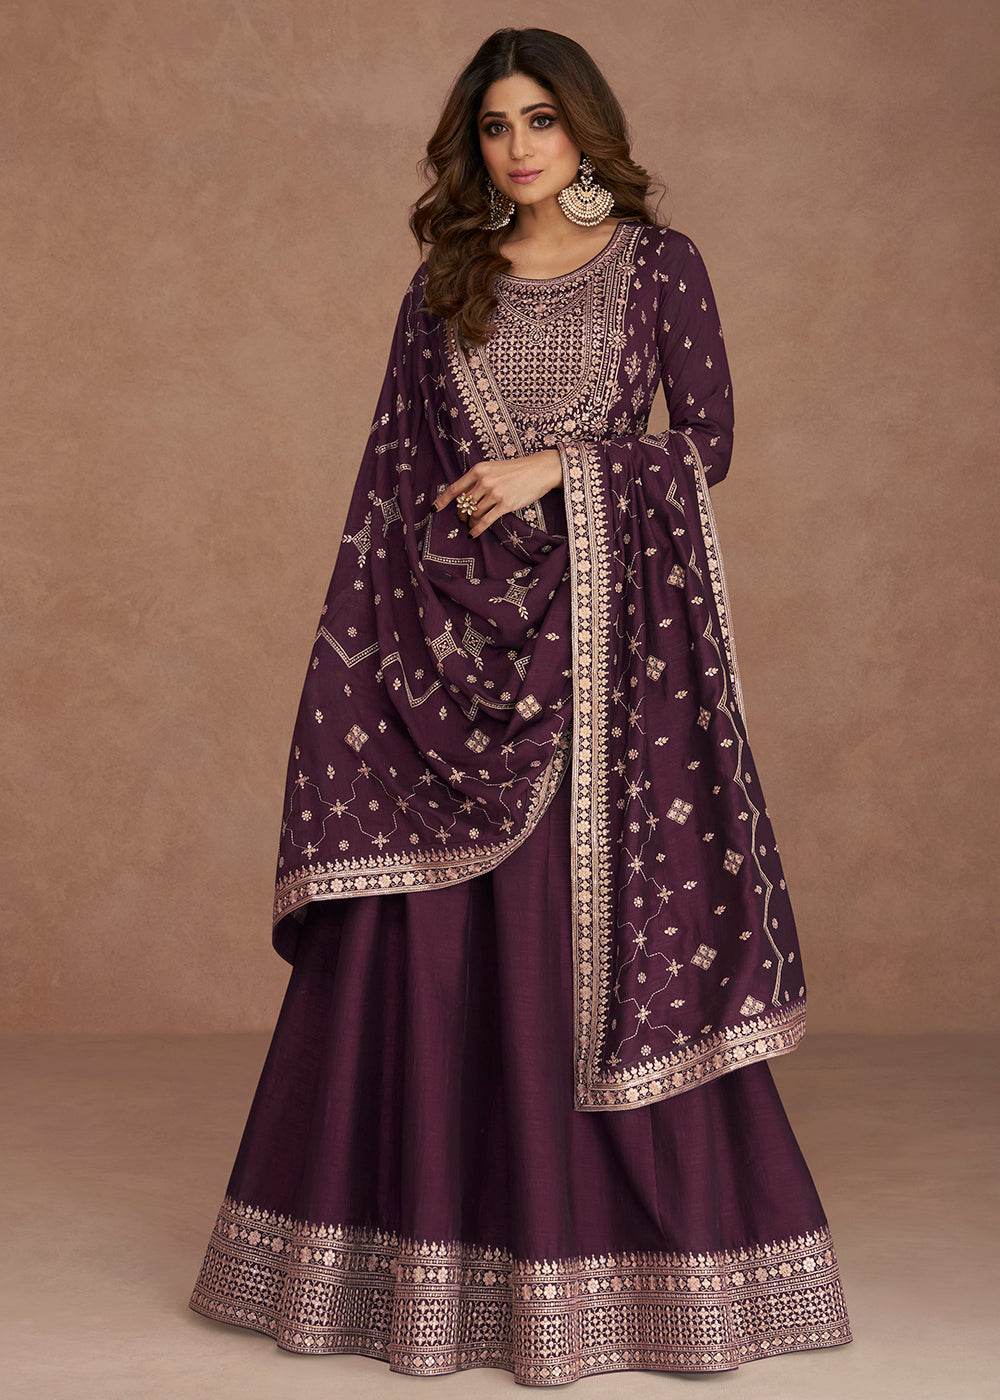 Buy Now Shamita Shetty Festive Luminous Purple Silk Anarkali Suit Online in USA, UK, Australia, New Zealand, Canada, Italy & Worldwide at Empress Clothing. 